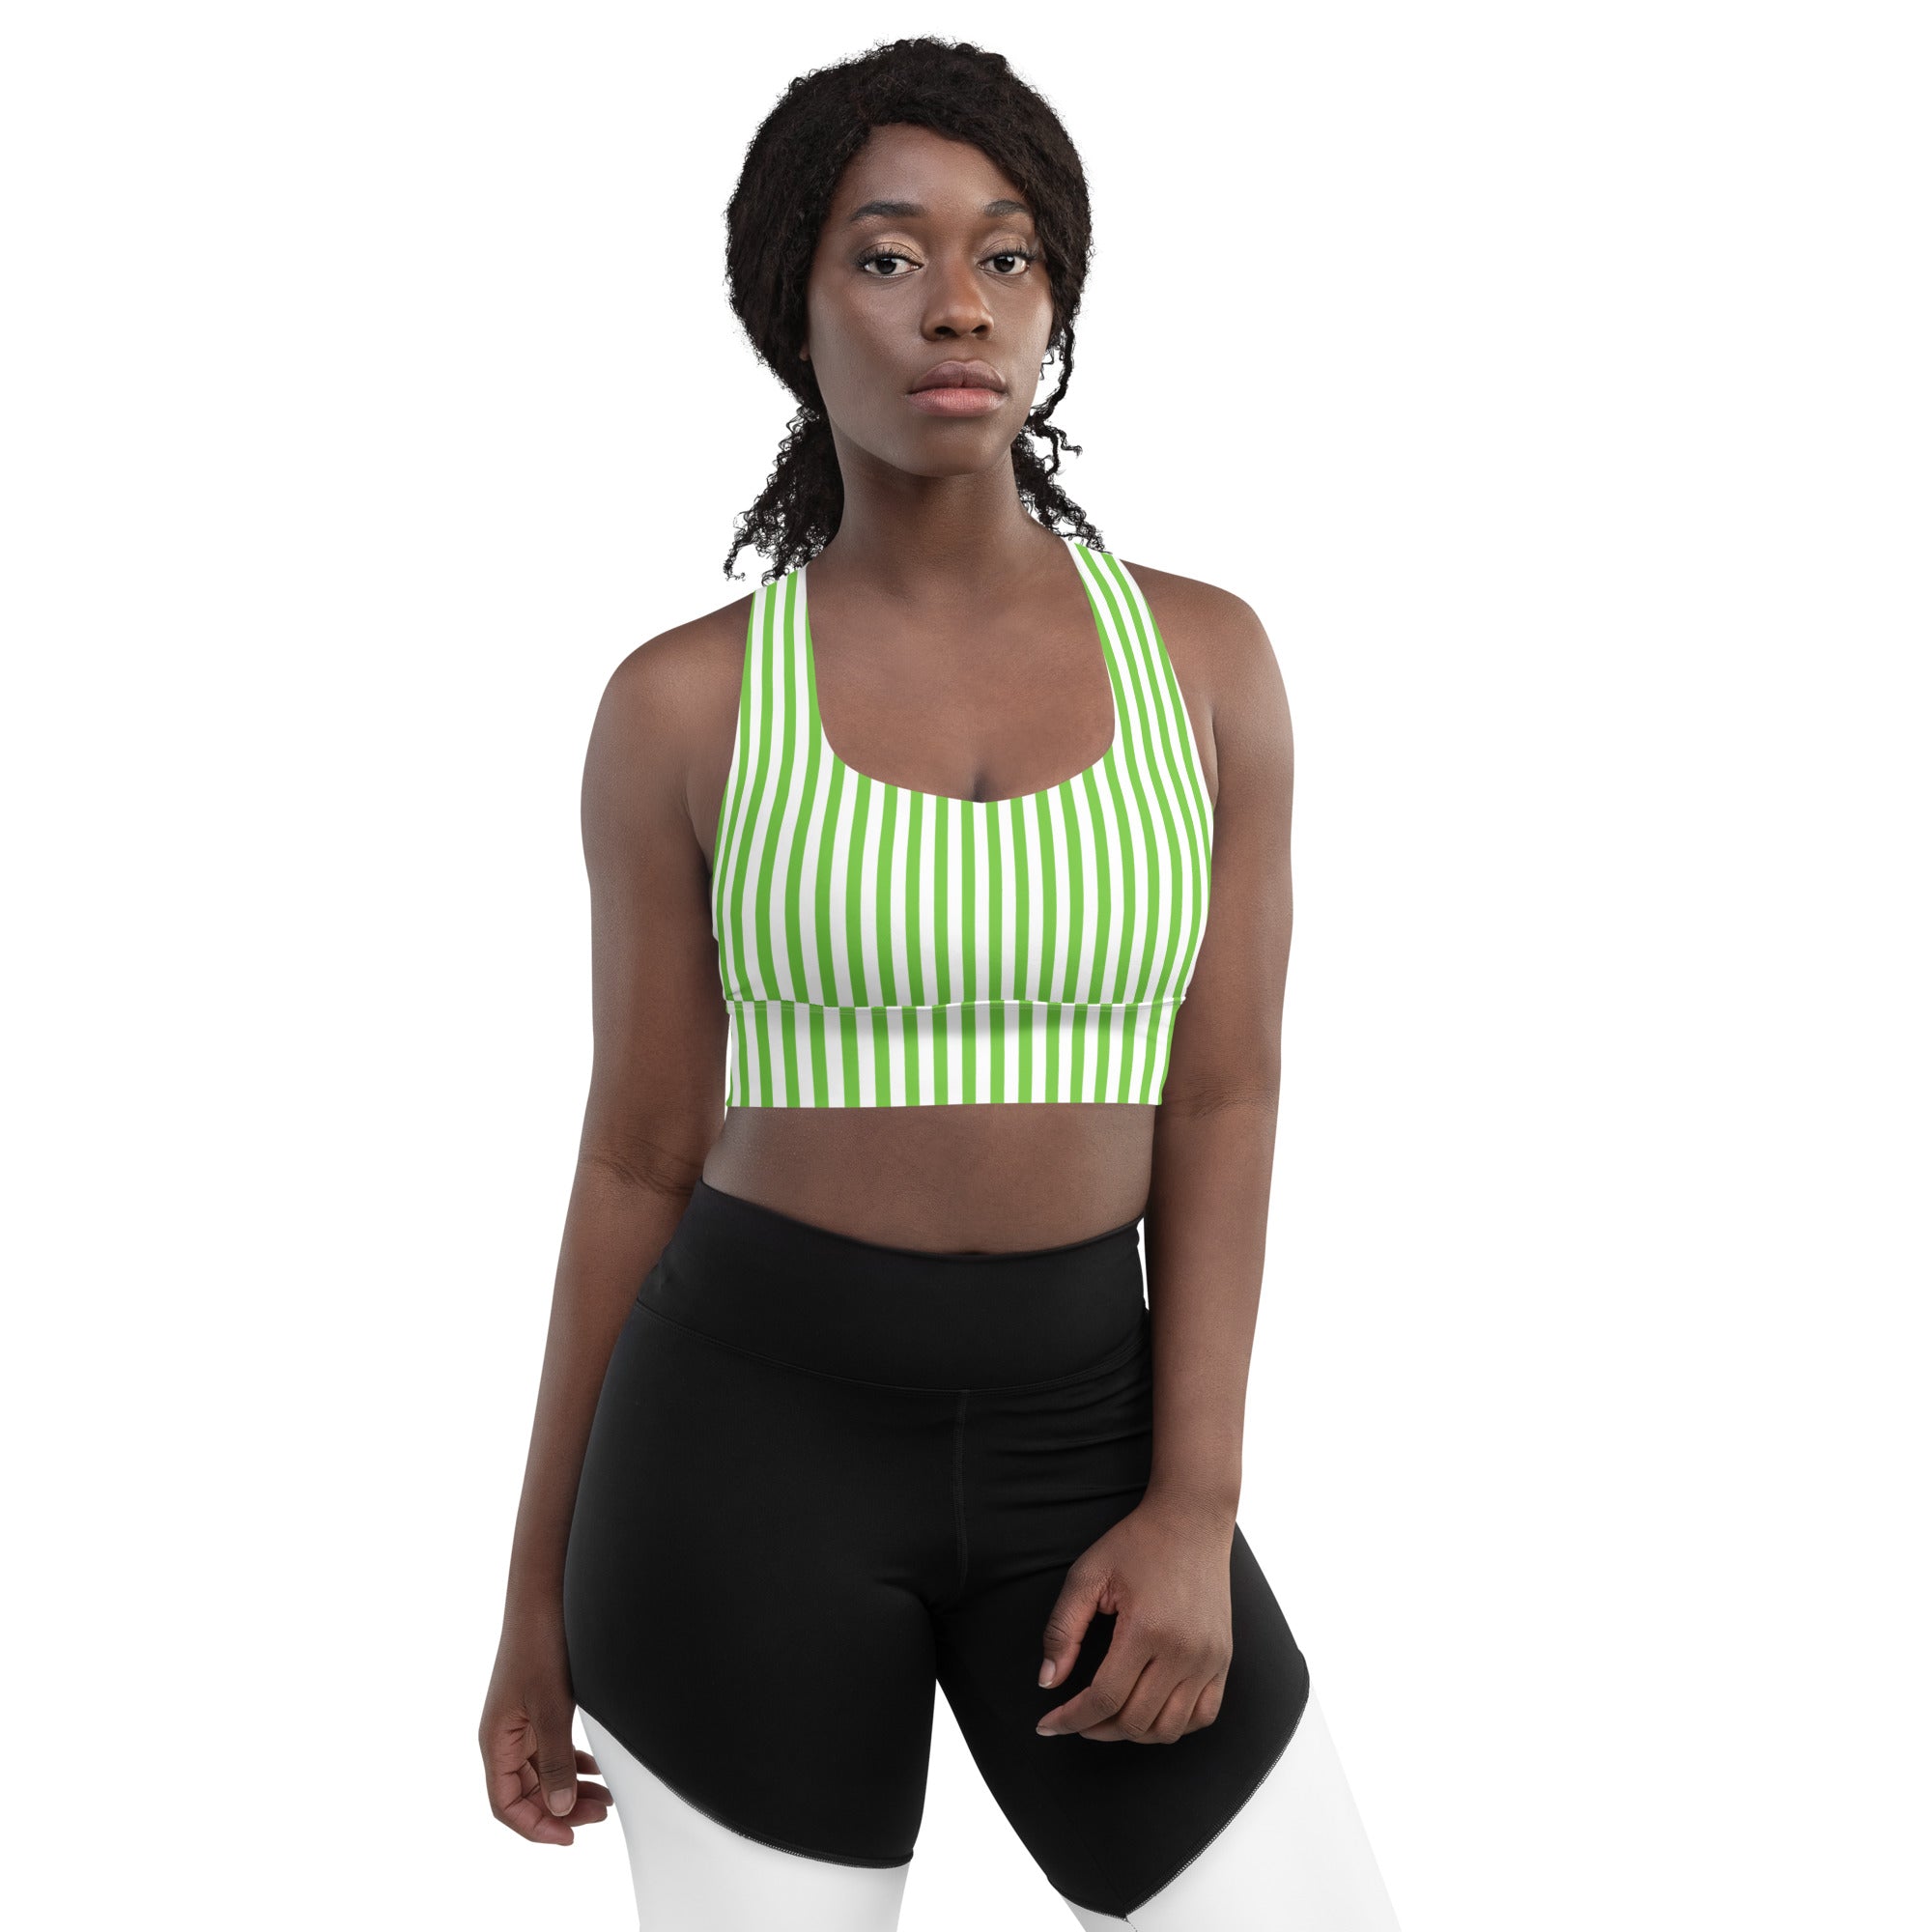 Longline sports bra- White and Green Stripes